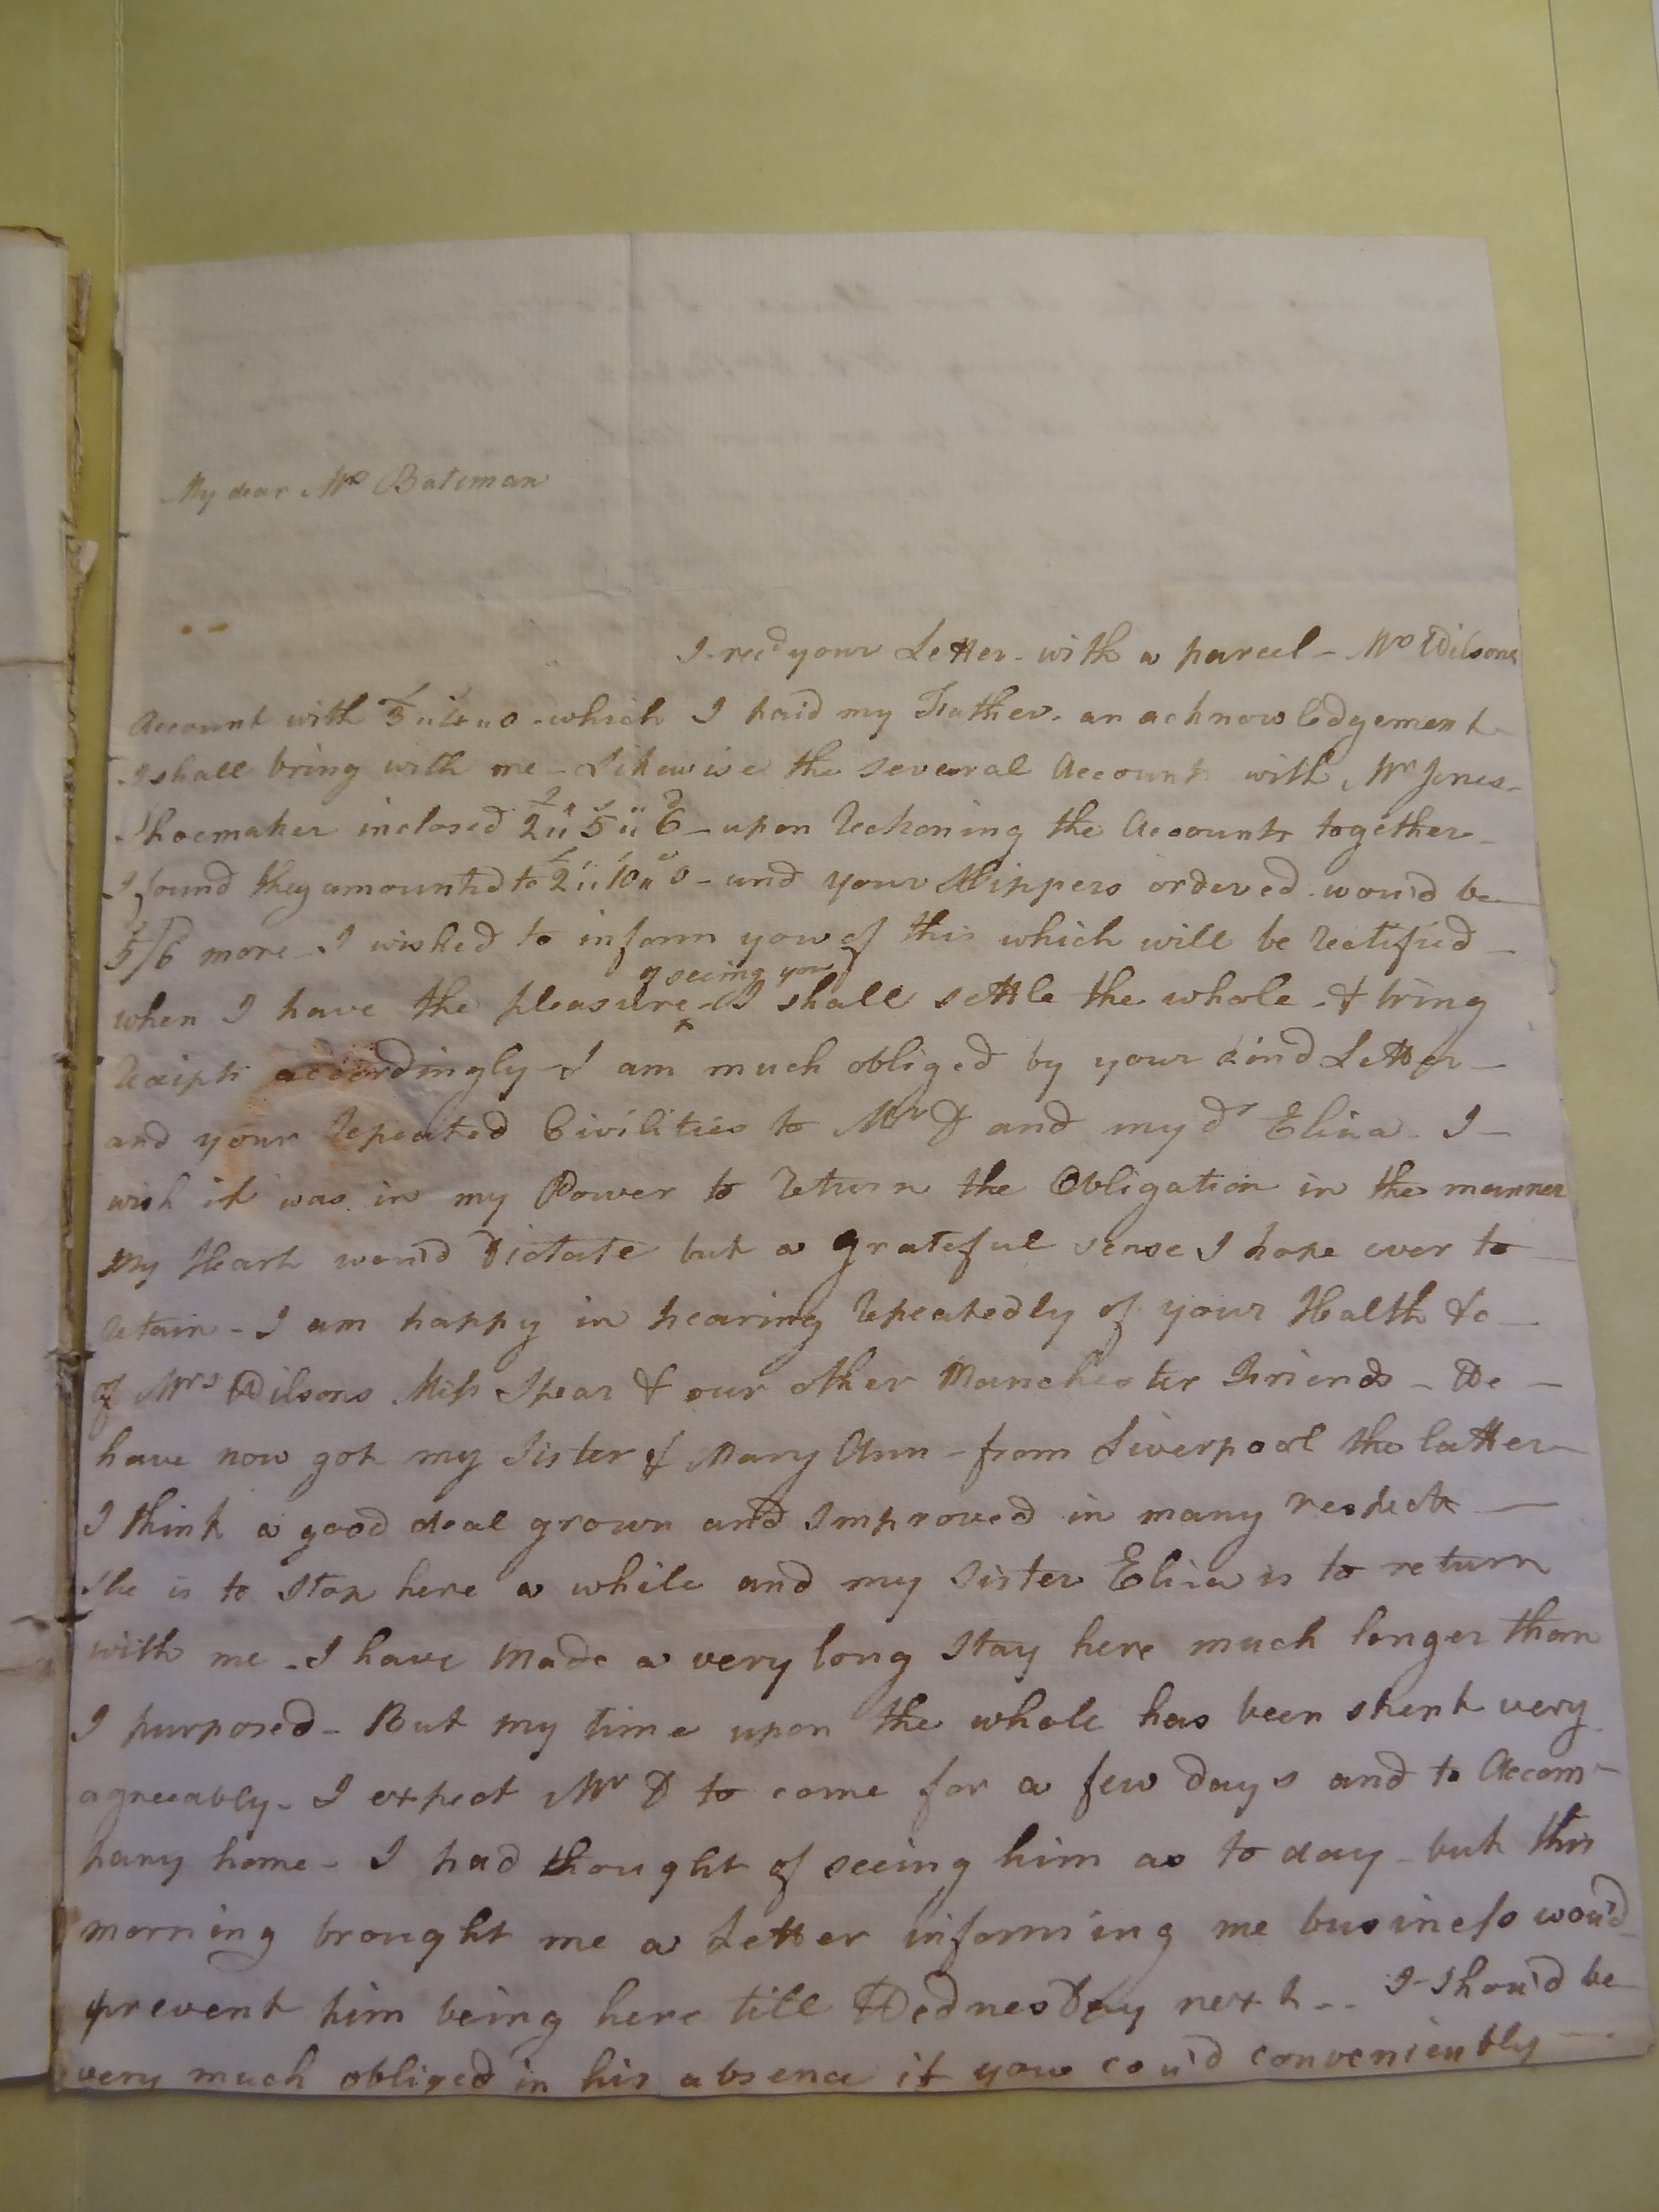 Image #1 of letter: Mary Jane Hodson to Rebekah Bateman, 23 June 1791